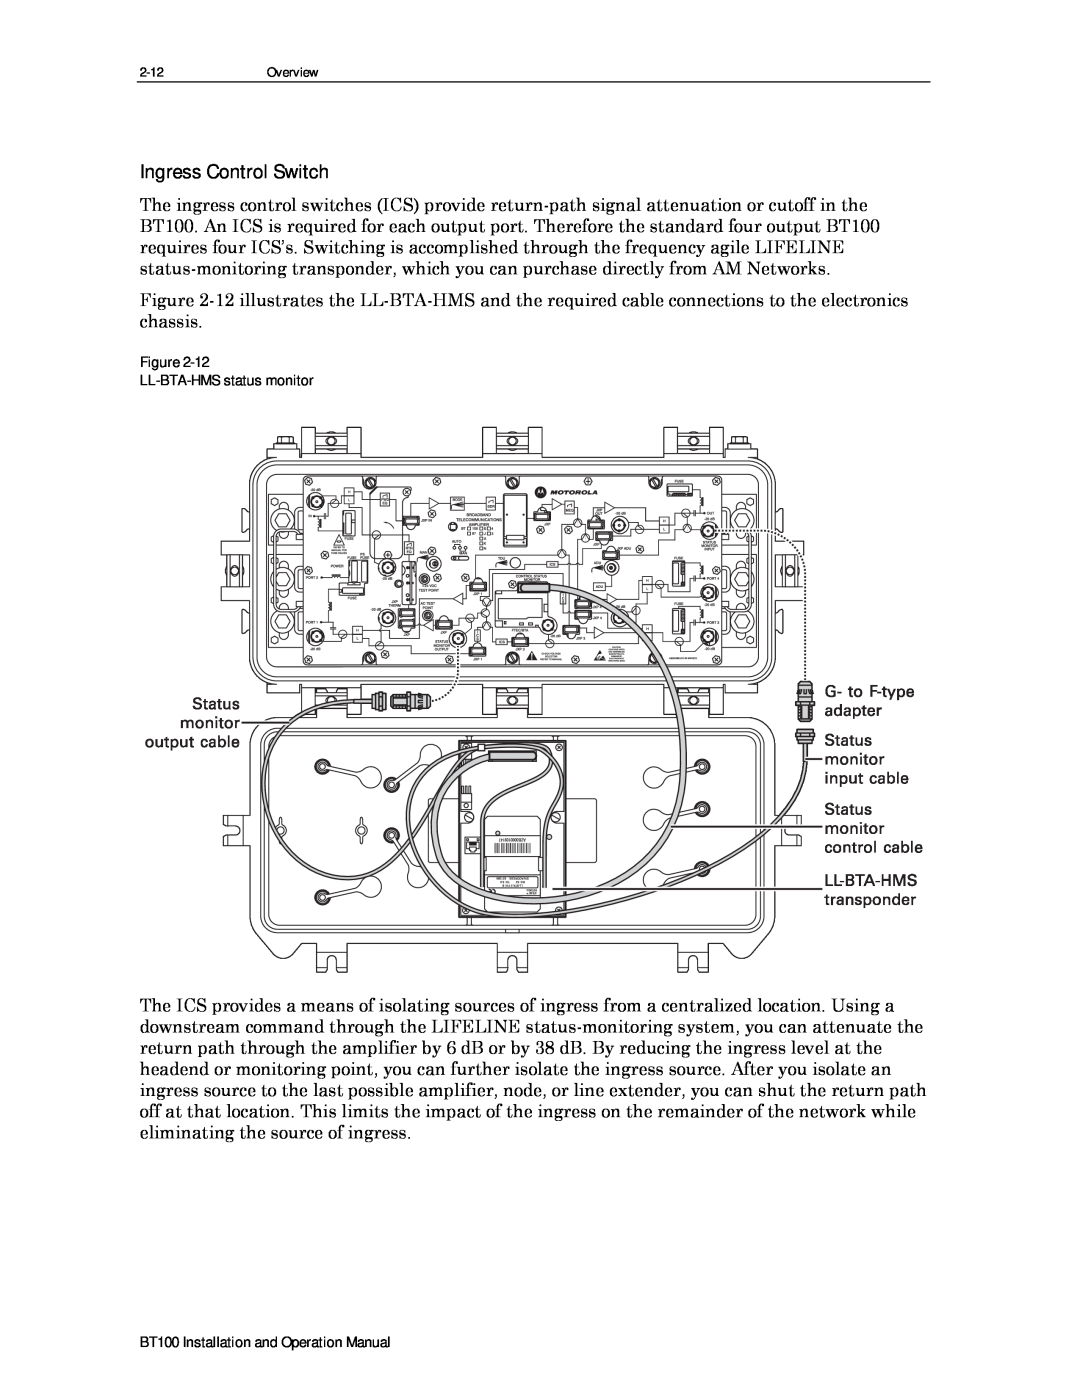 Motorola BT100 operation manual Ingress Control Switch, Figure LL-BTA-HMSstatus monitor 